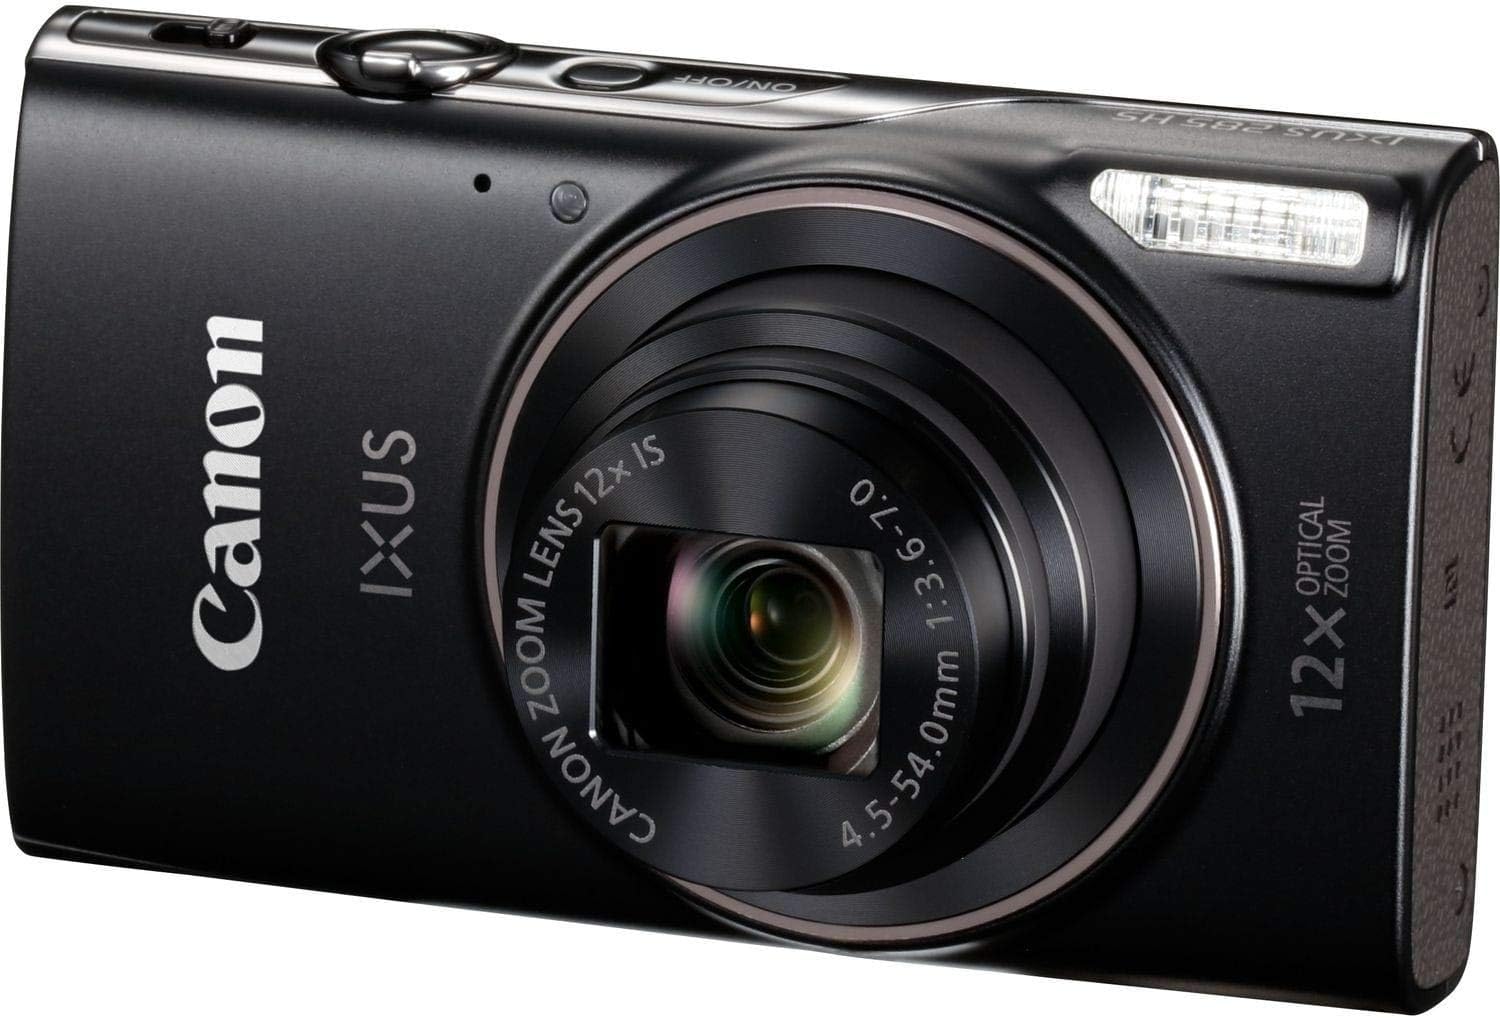 Canon IXUS 285 HS Compact Camera - Black - Refurbished Excellent